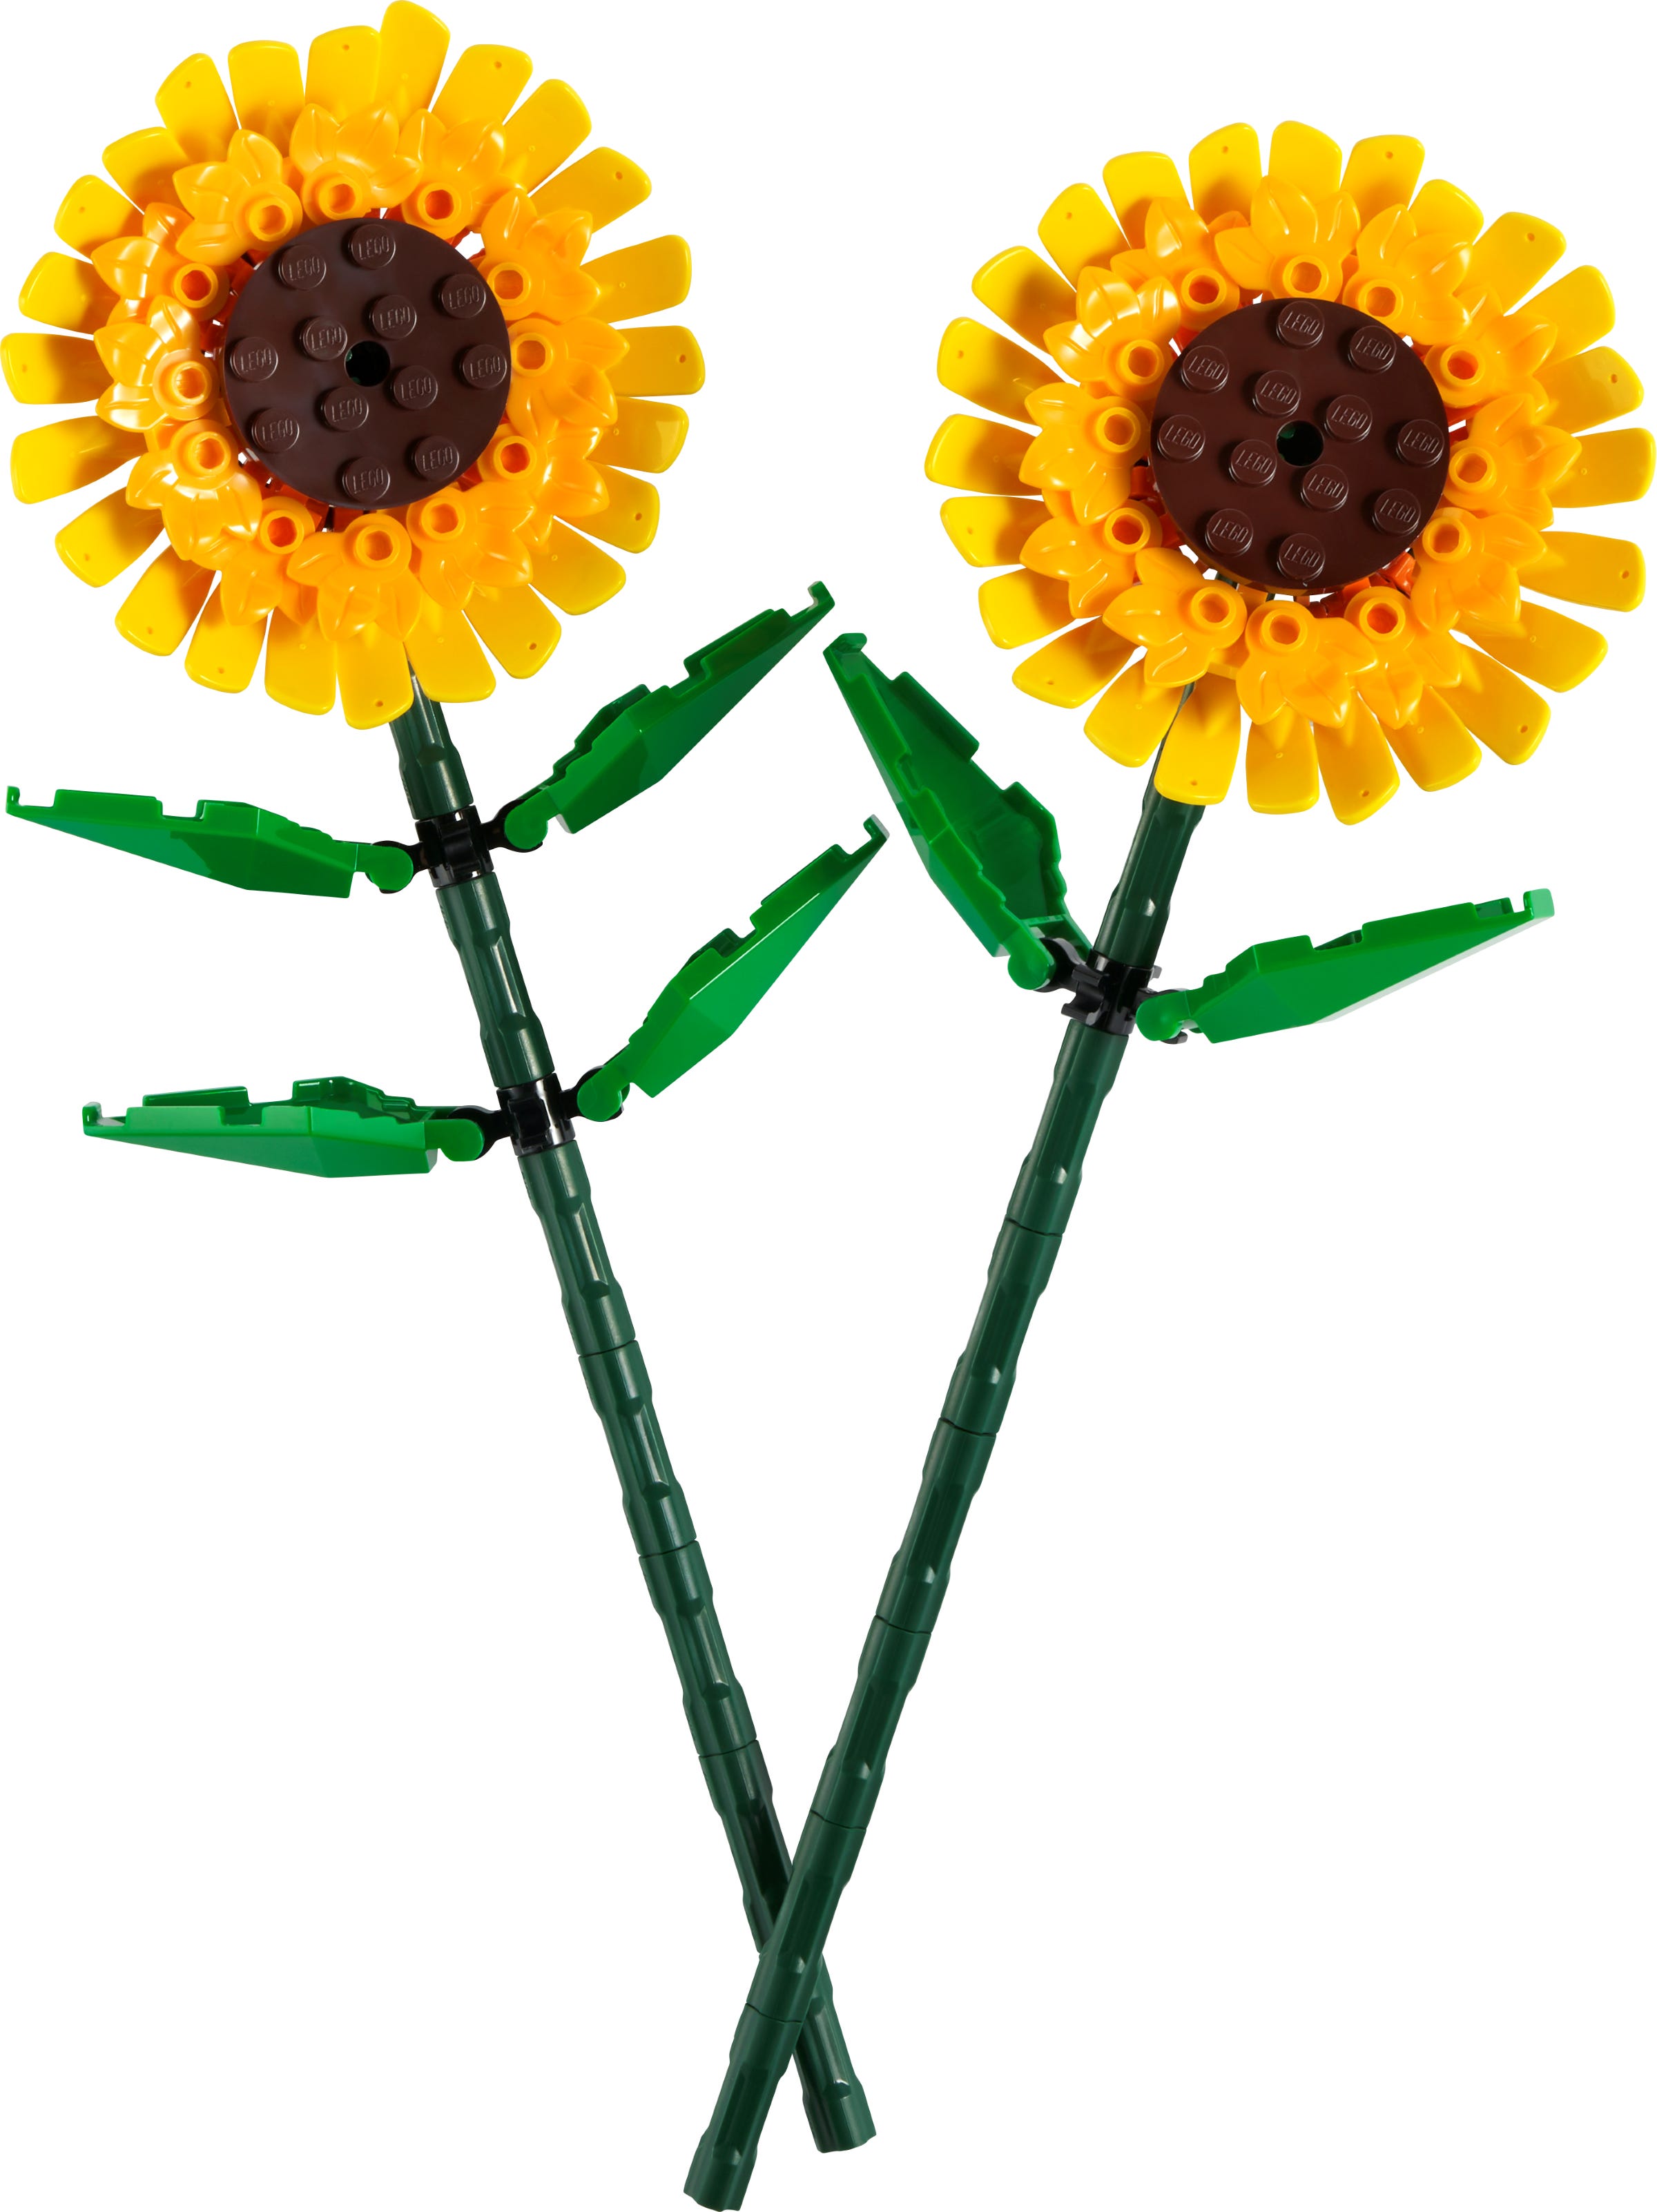 Image of 40524 Iconic Sonnenblumen, Konstruktionsspielzeug